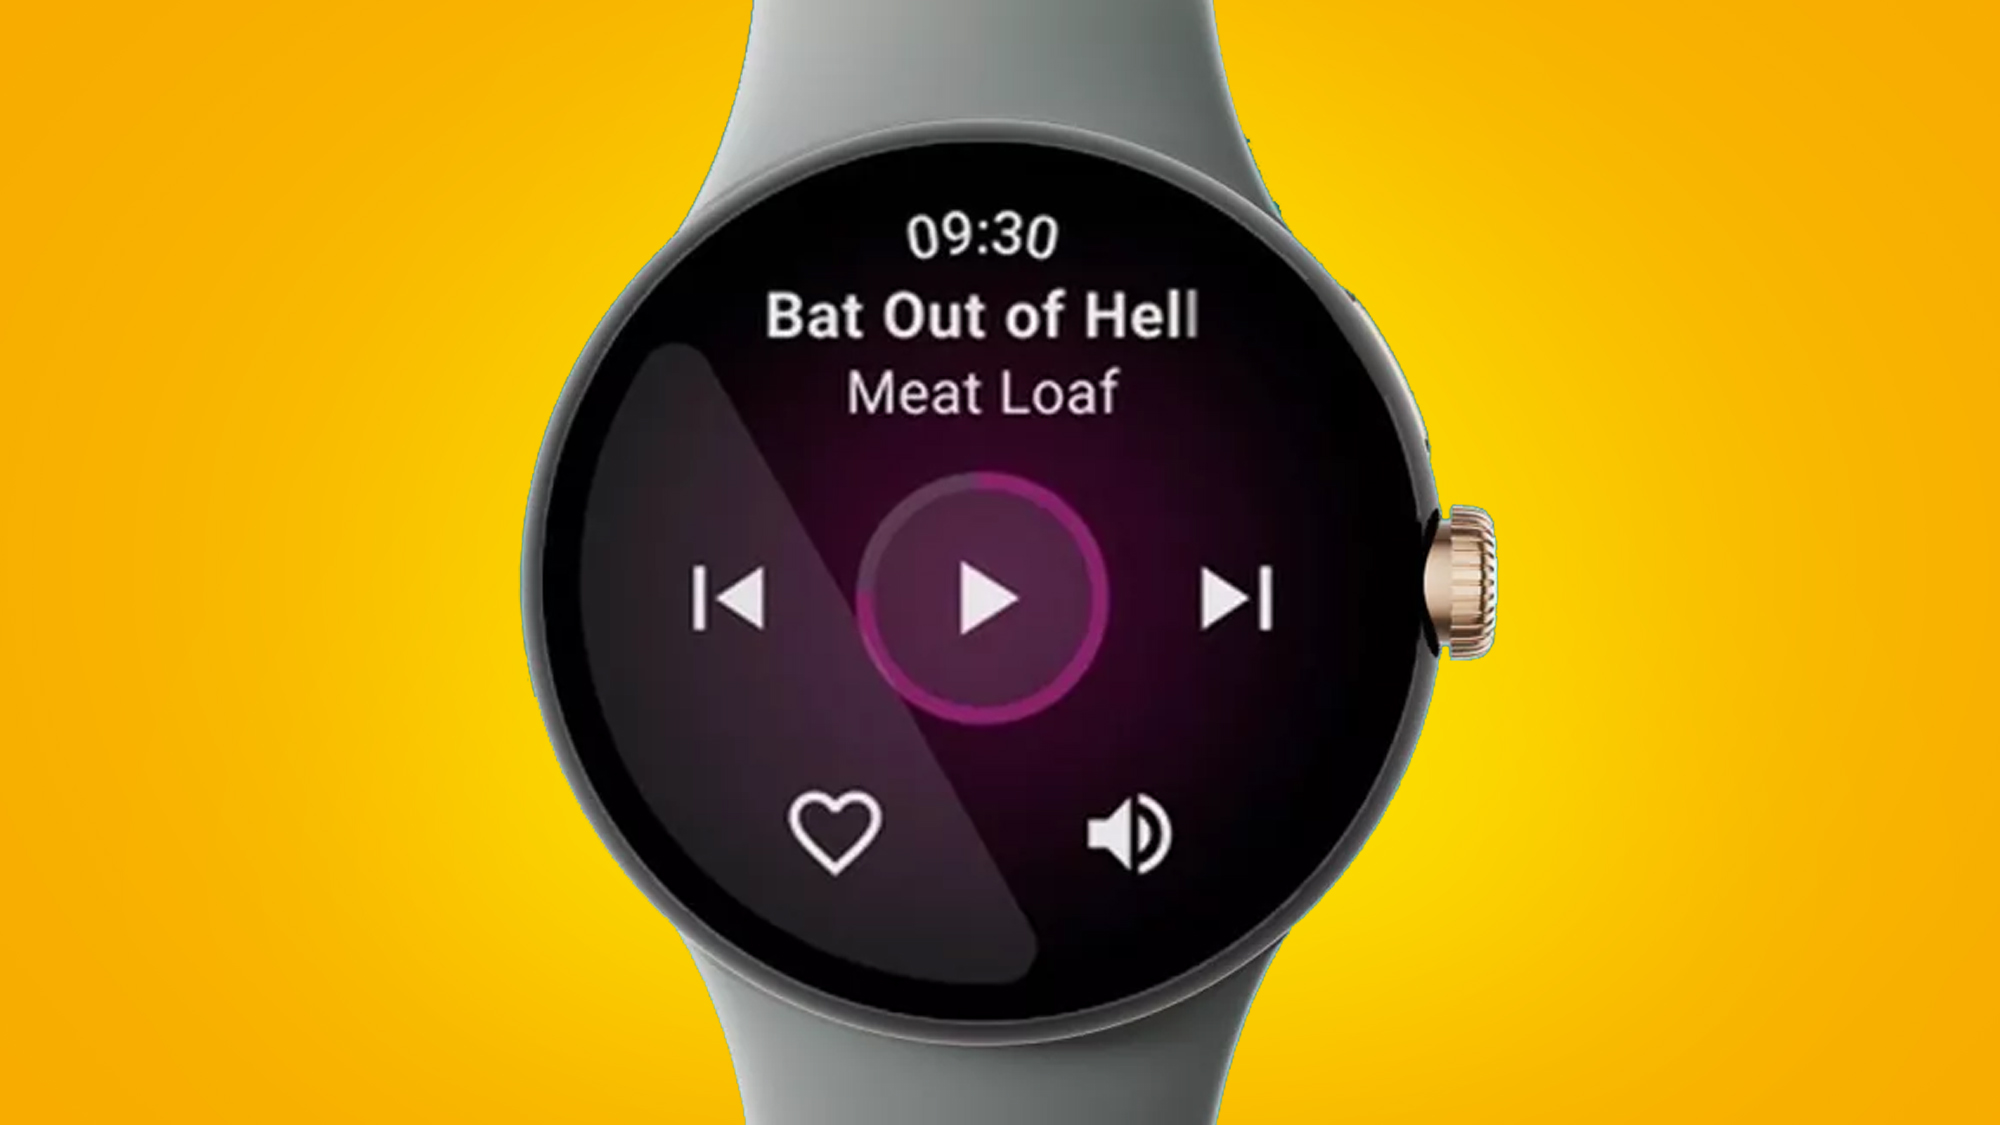 Smartwatch showing Google Wear OS on orange background